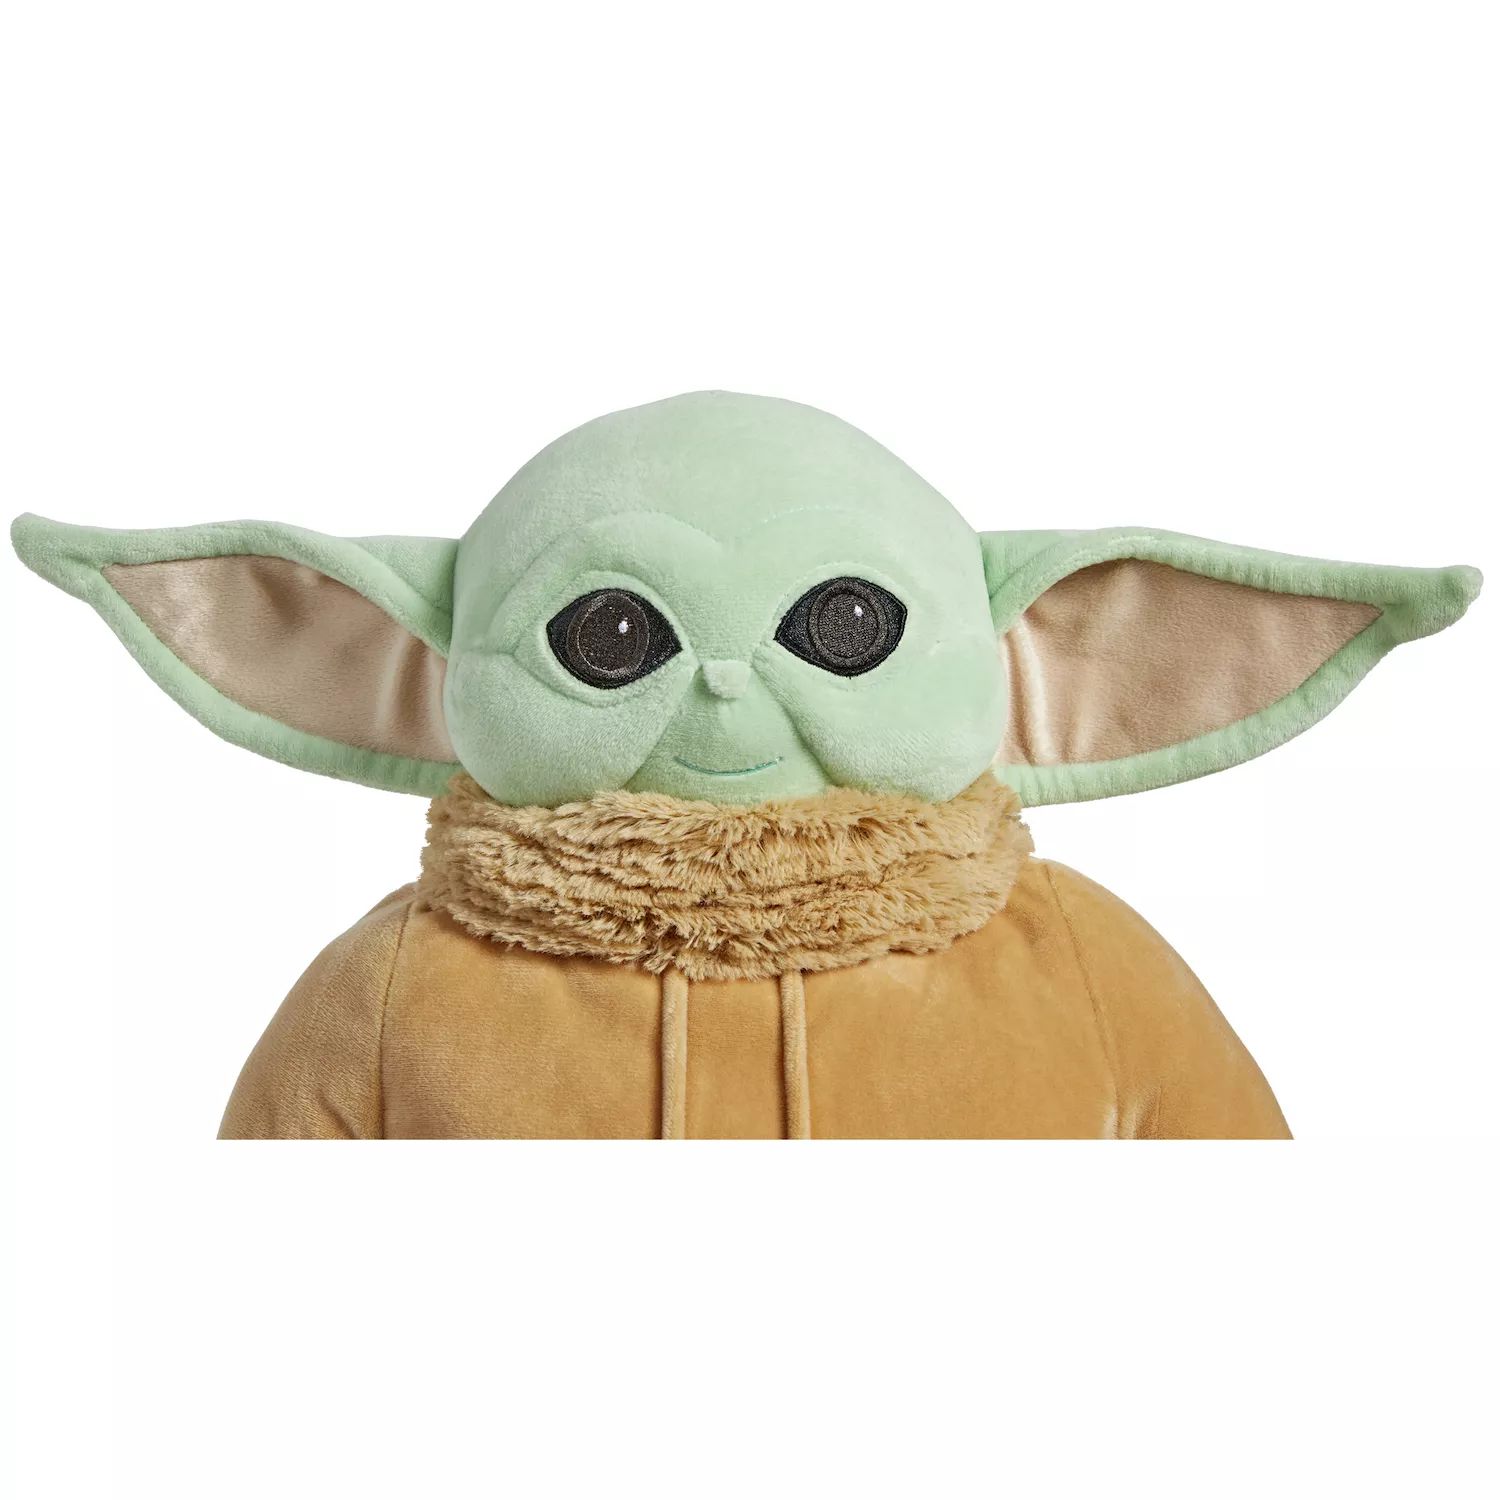 Disney Star Wars The Mandalorian Baby Yoda The Child Плюшевая игрушка от Pillow Pets Pillow Pets